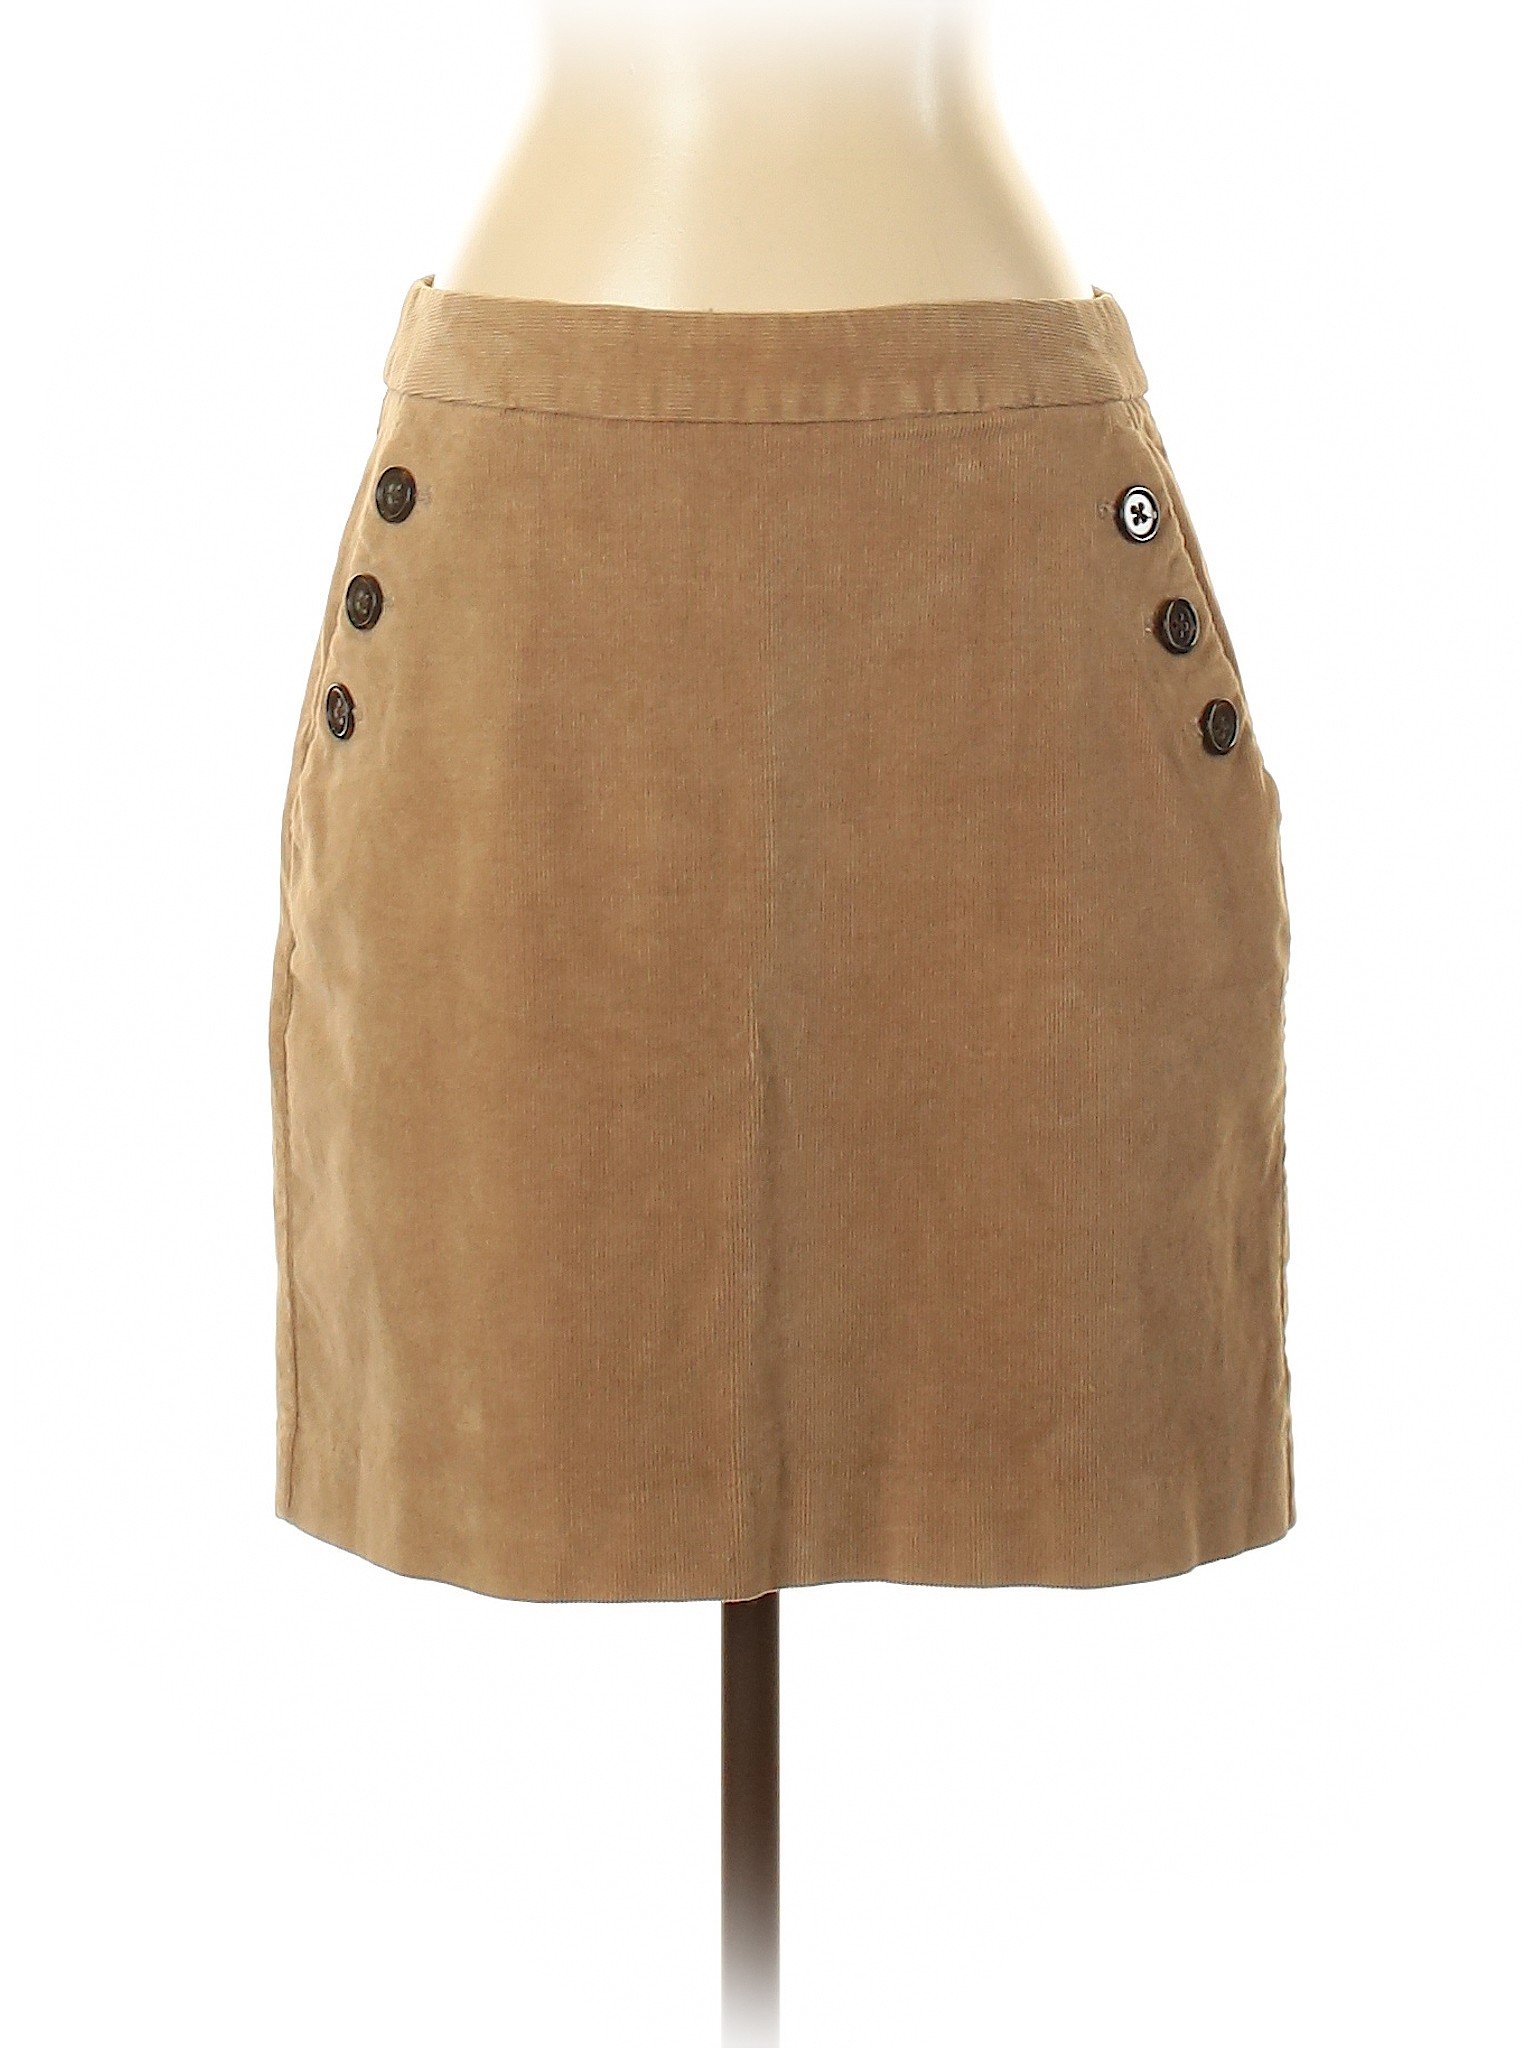 Banana Republic Women Brown Casual Skirt 4 | eBay